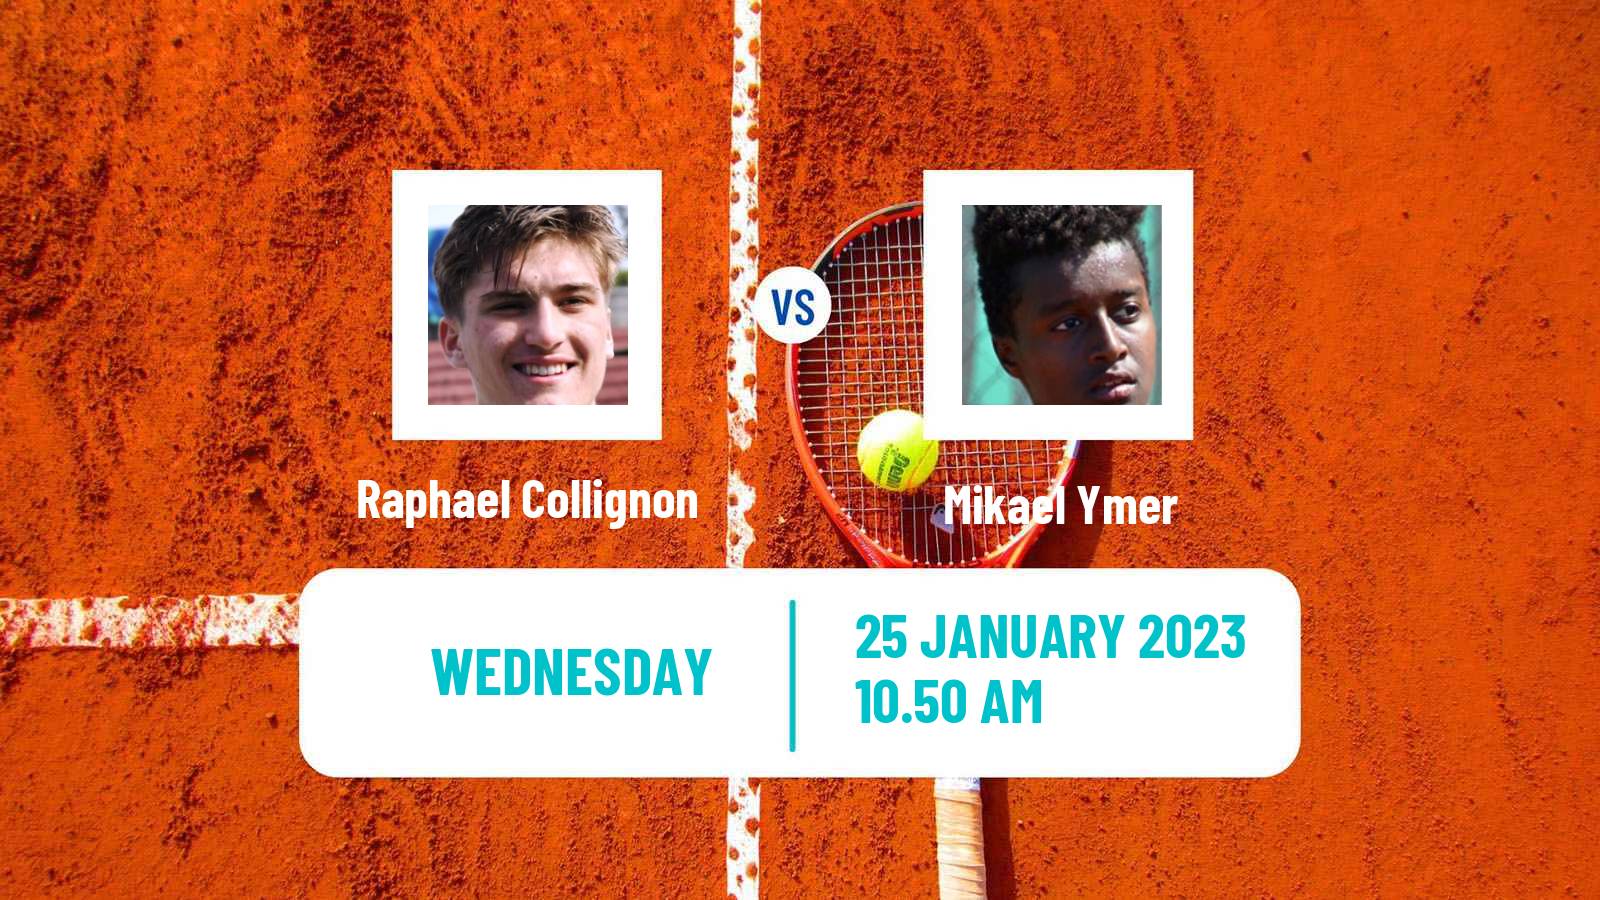 Tennis ATP Challenger Raphael Collignon - Mikael Ymer